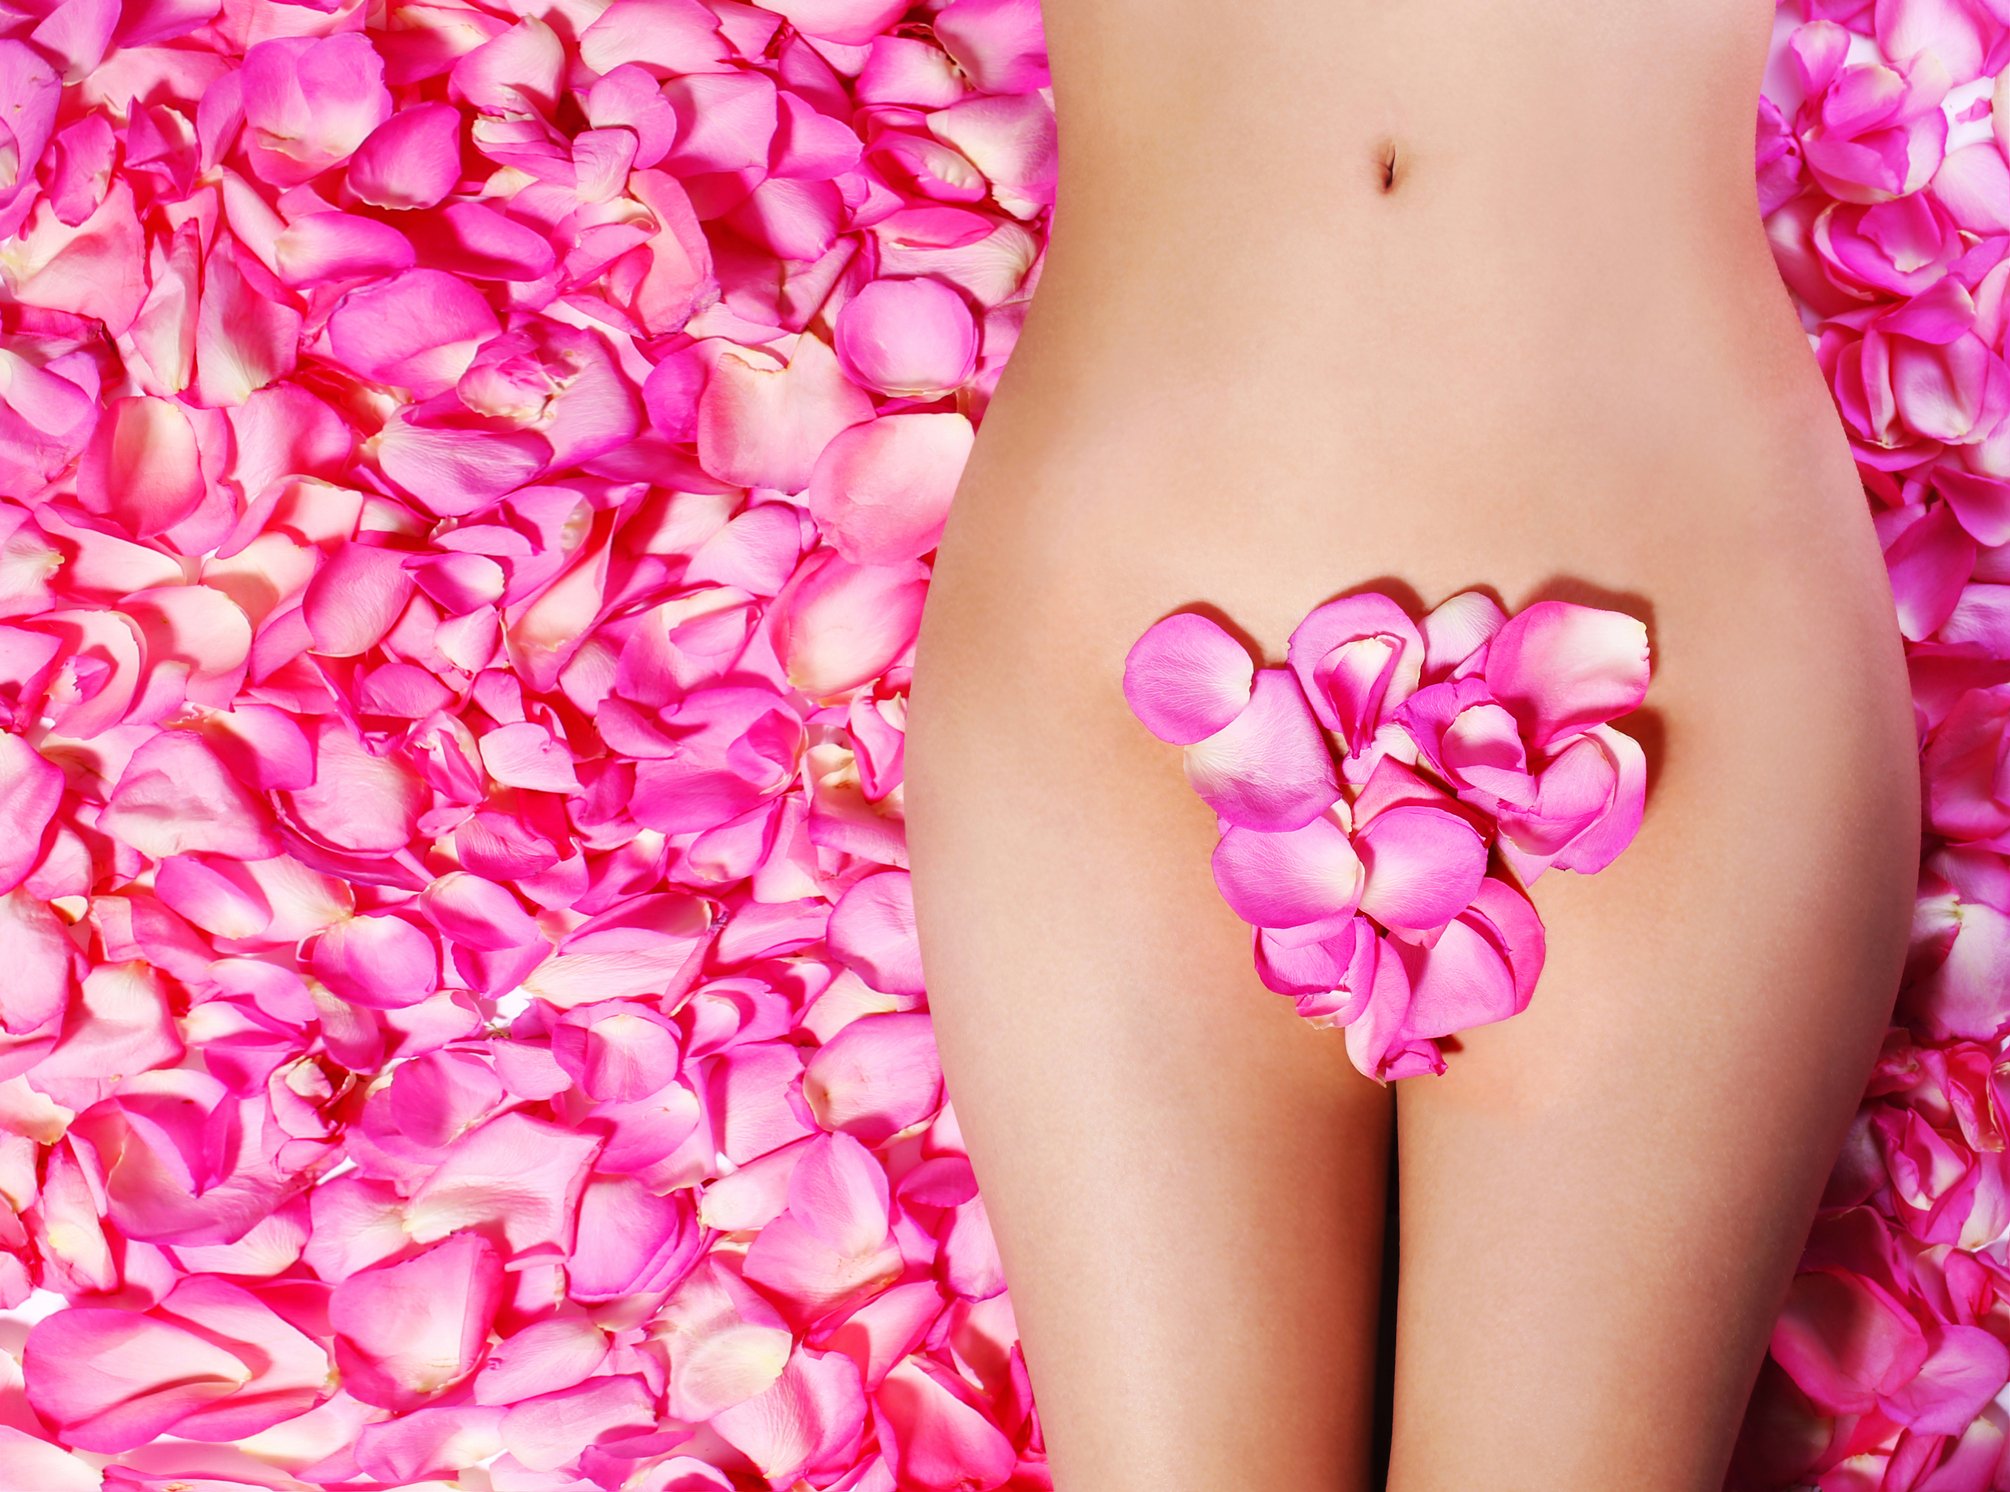 61ea5a9babc7a4a05b2d76c42a AzA3NmE5YmEwMjYy petals of pink roses on womans body waxing bikini zone